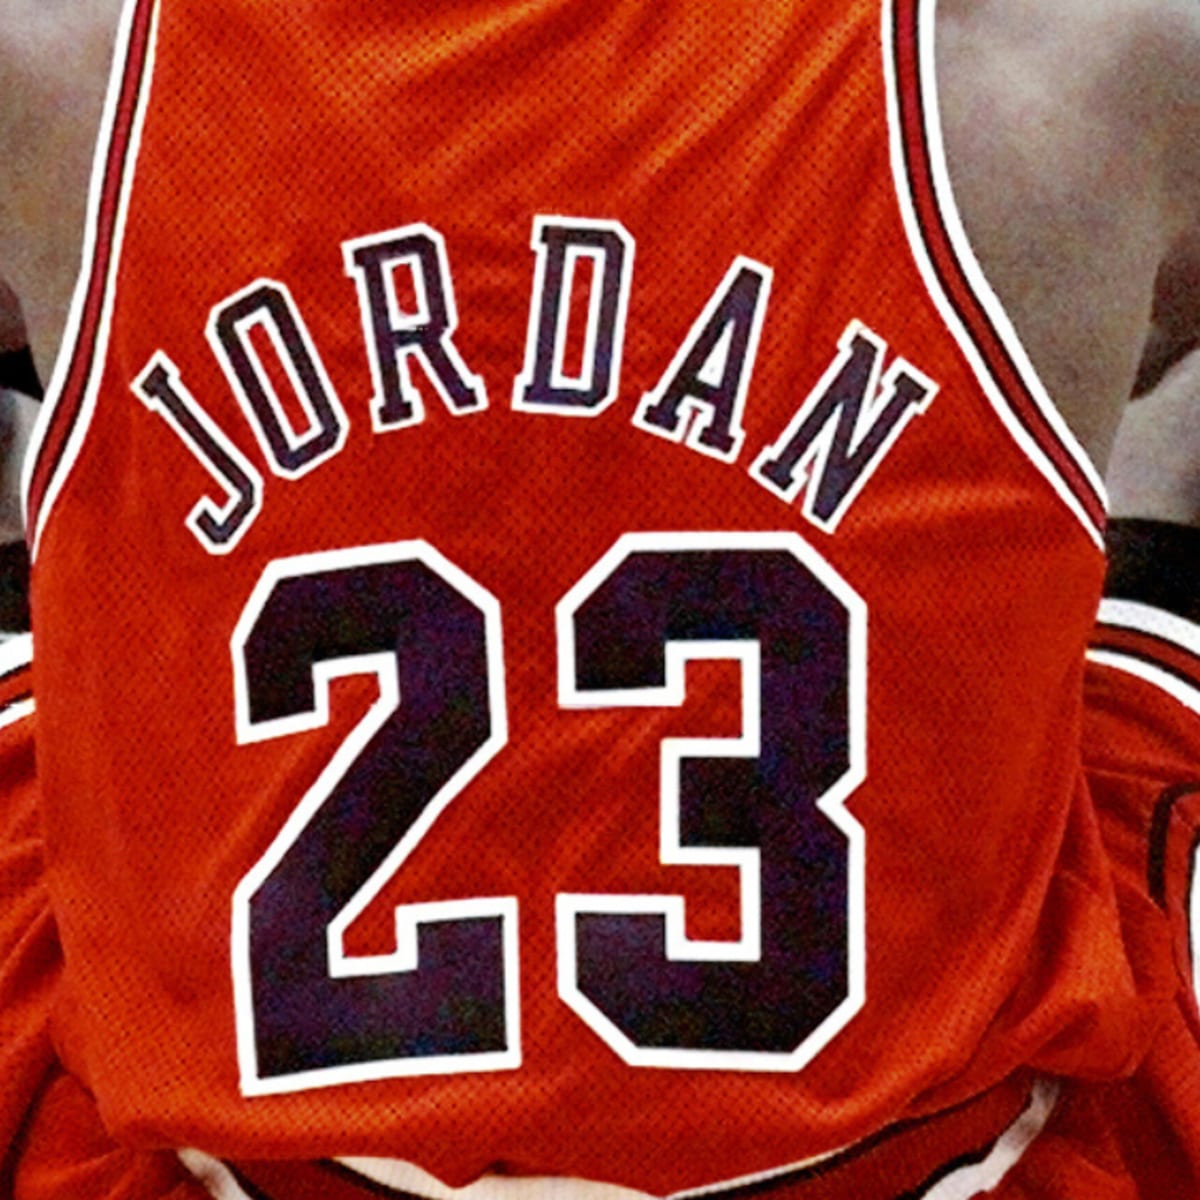 Michael Jordan's 1998 Finals Sneakers Have a Record-Breaking $1.8M Bid –  Robb Report